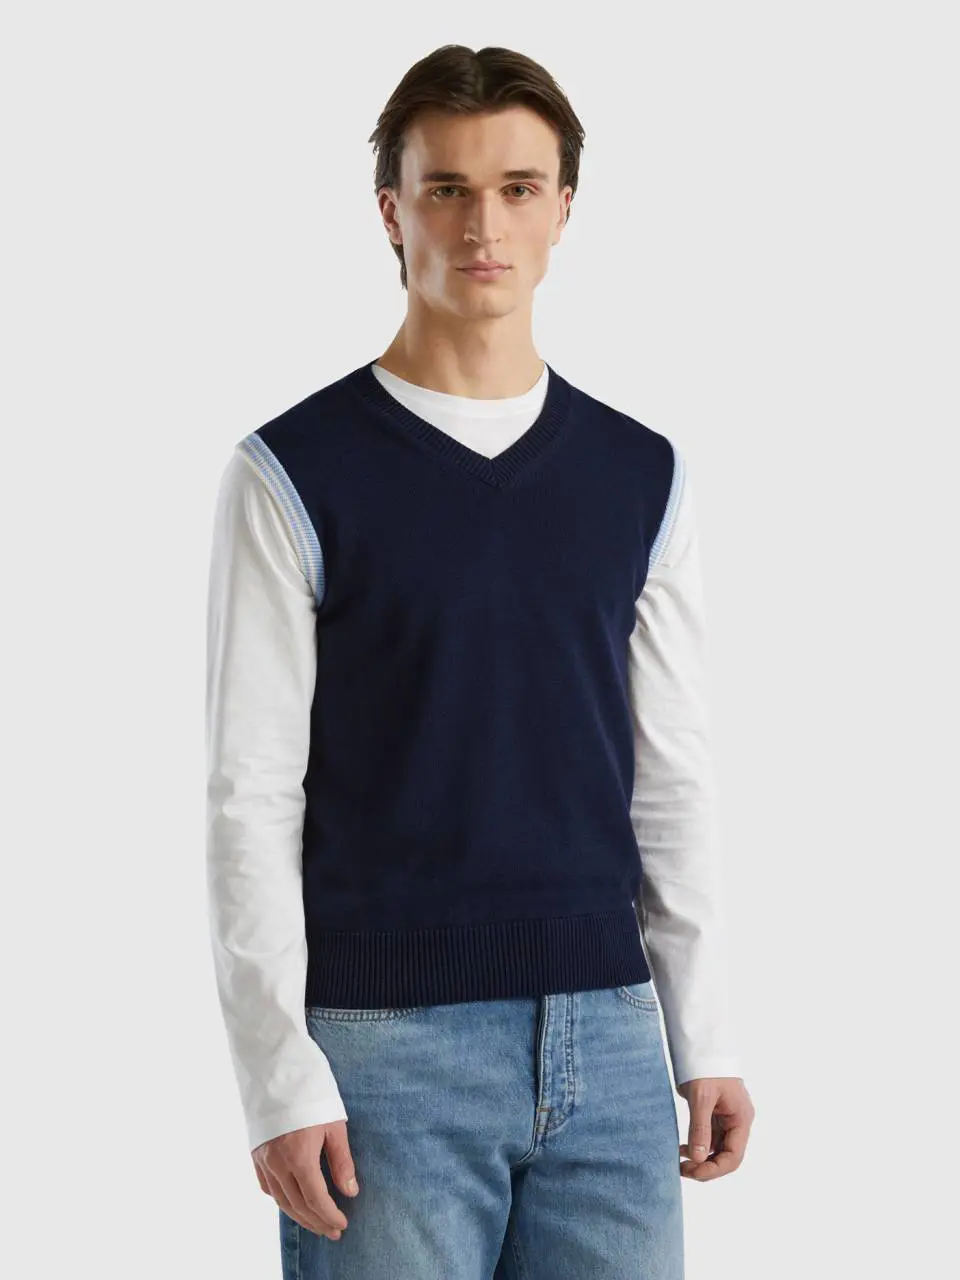 Benetton regular fit vest in 100% cotton. 1